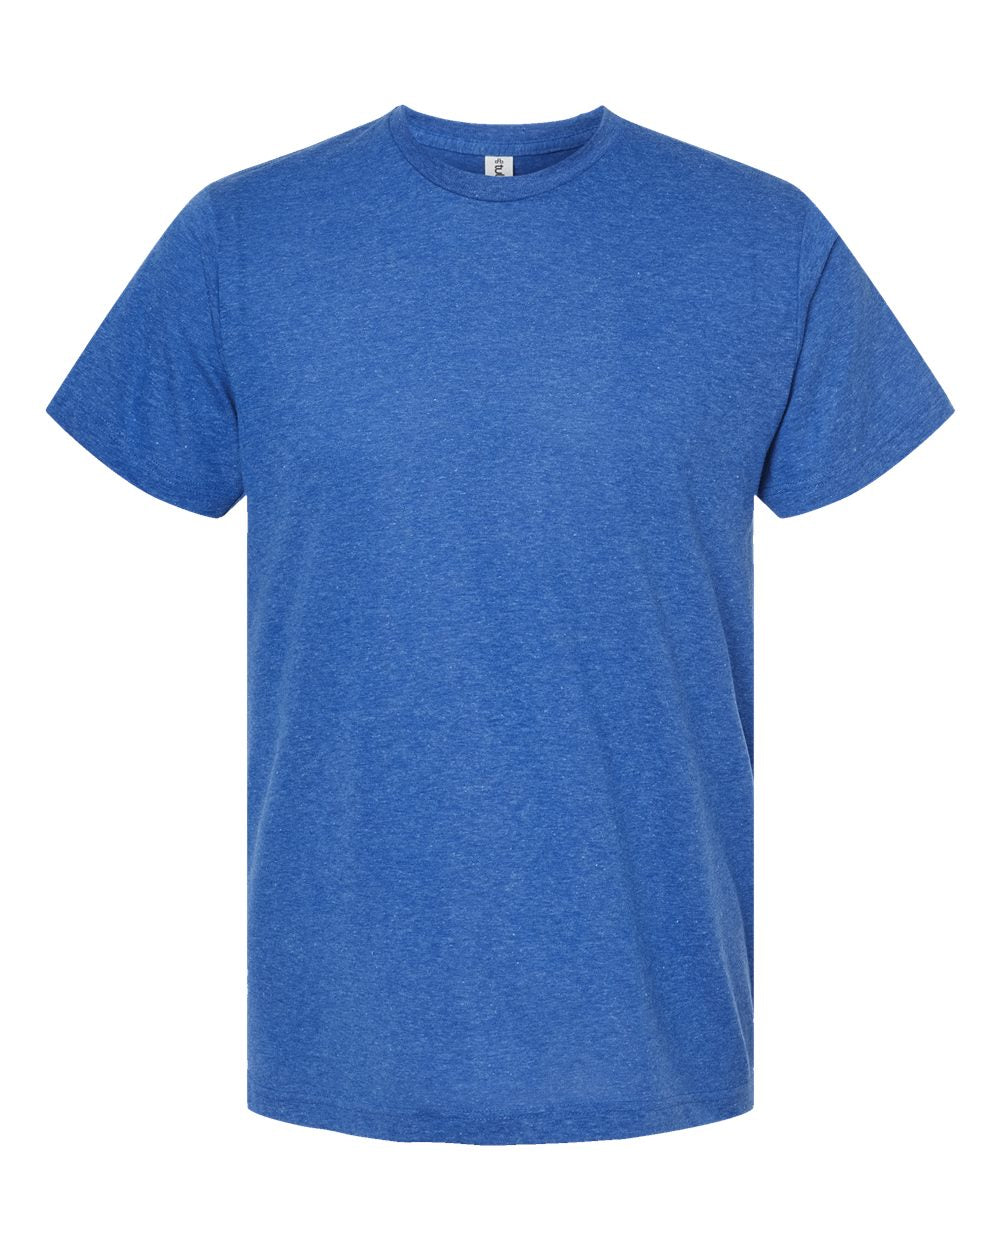 Tultex - Unisex Poly-Rich T-Shirt - 241